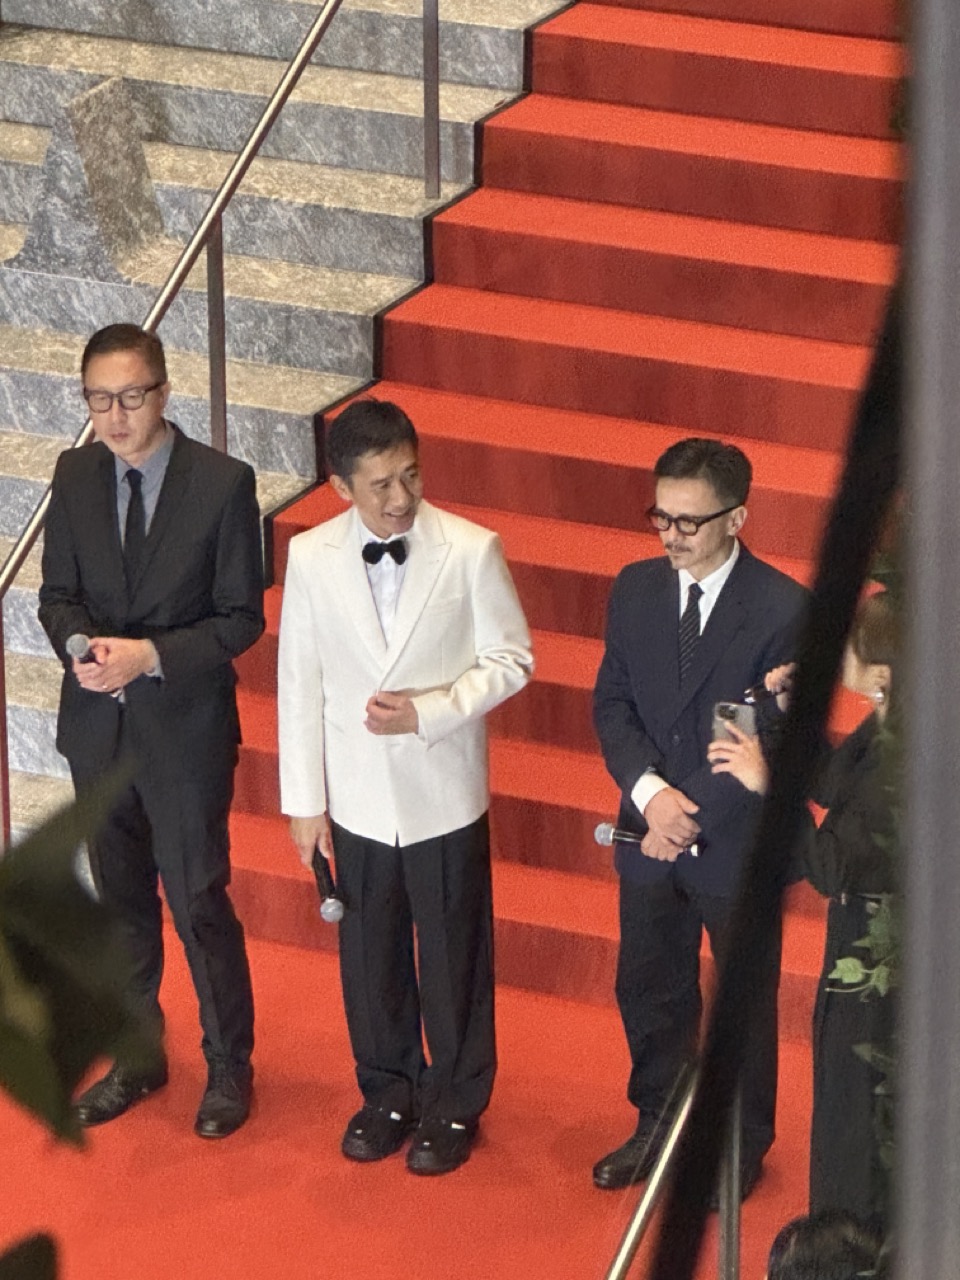 Tony leung, felix chong and ronald wong on gala red carpet interview